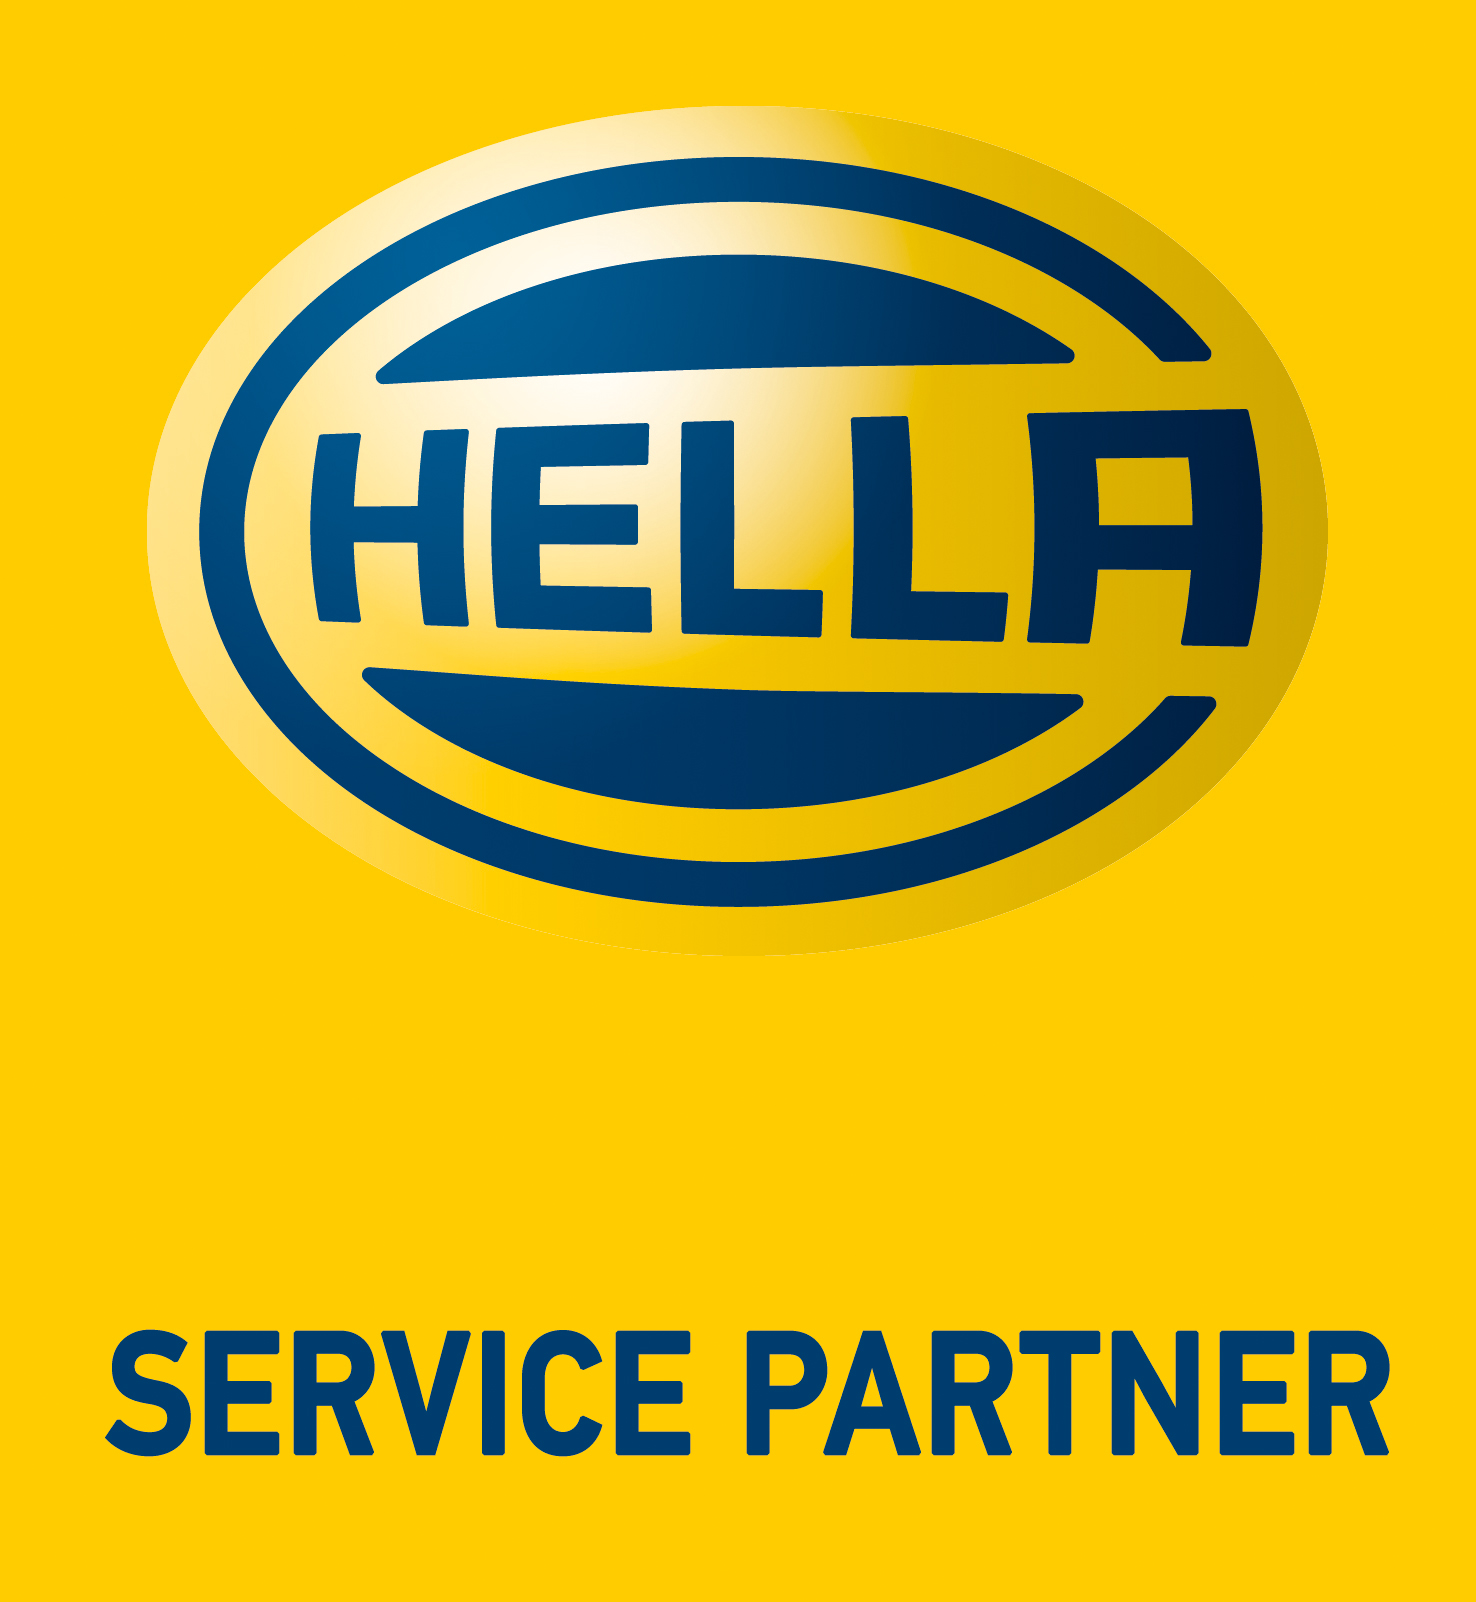 AutoTekniCom Holbæk - Hella Service Partner logo